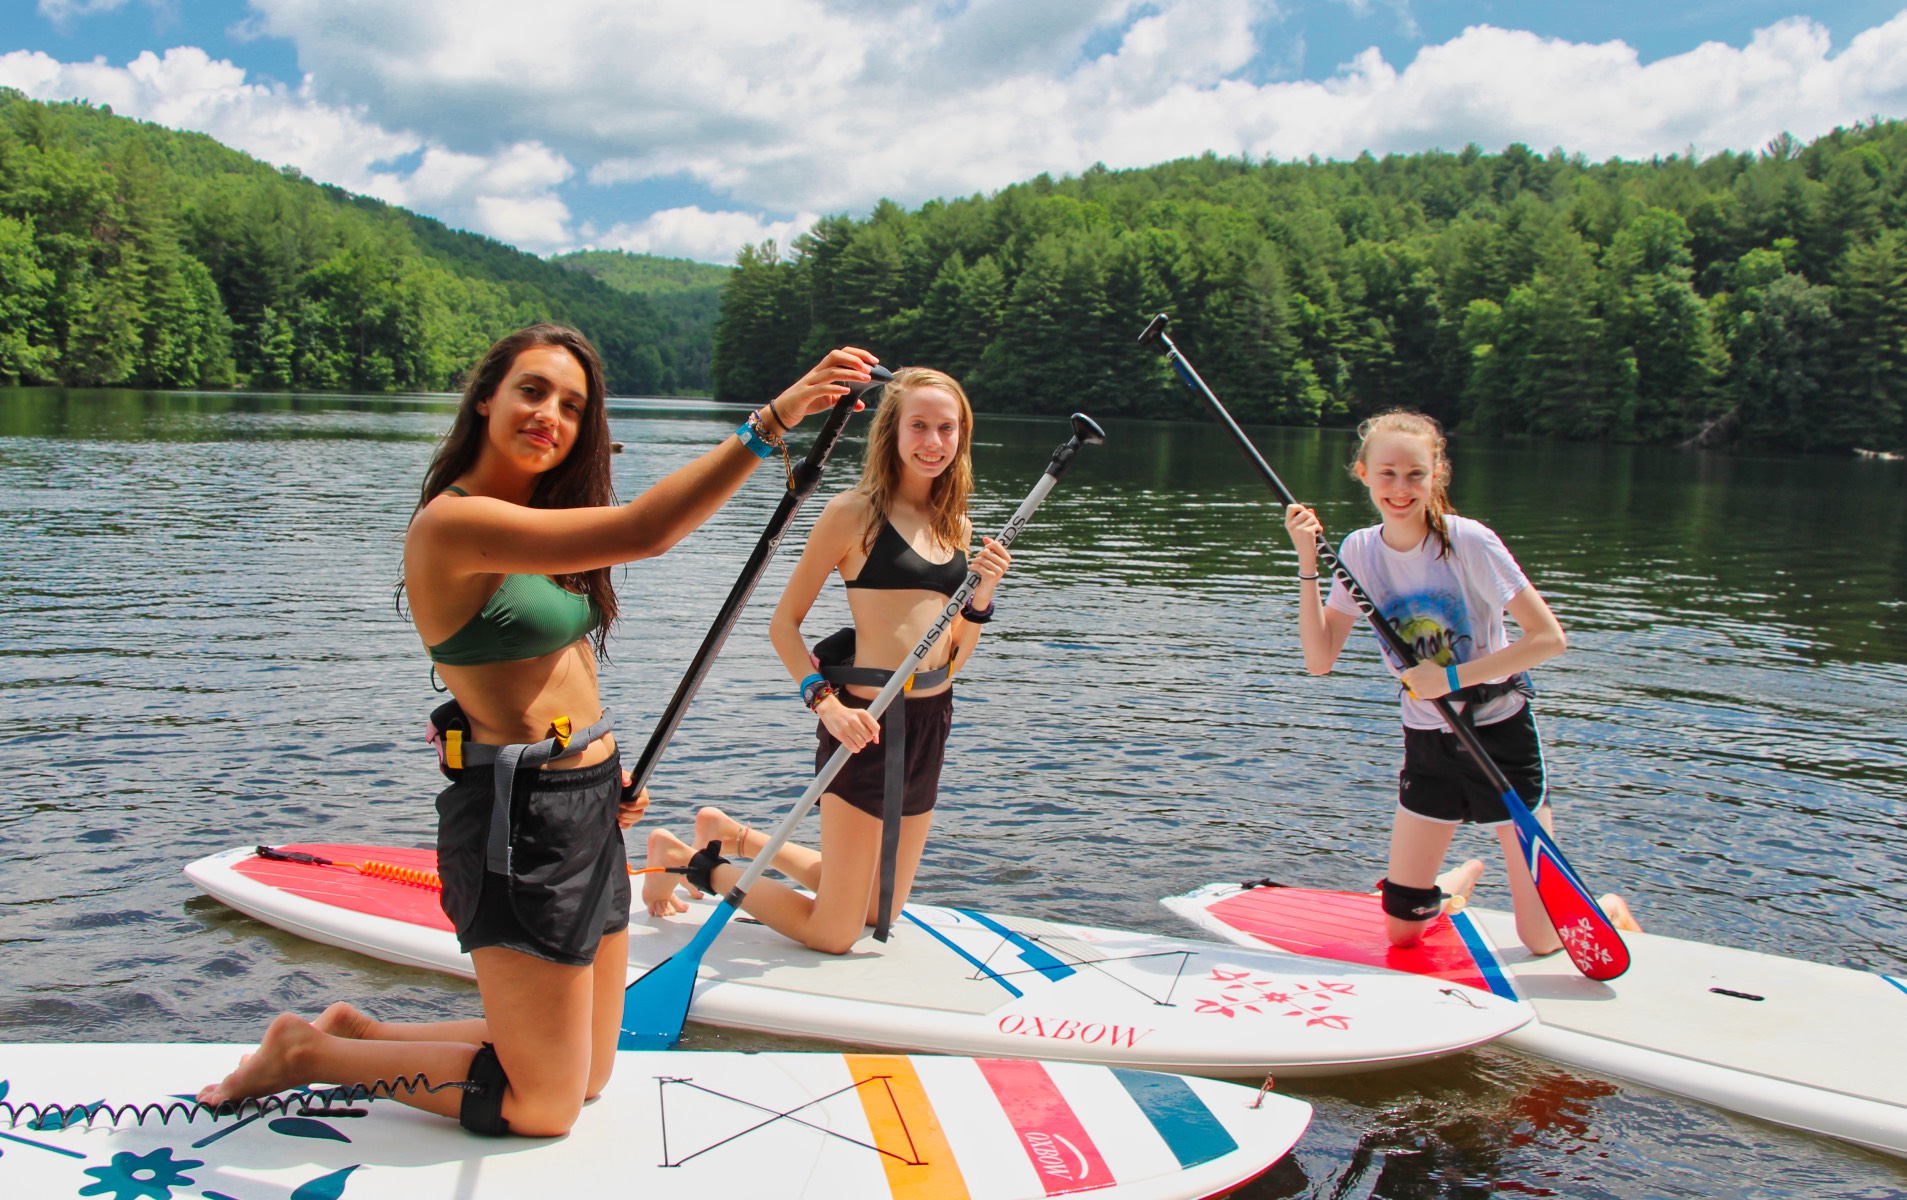 Camp girls paddle boarding